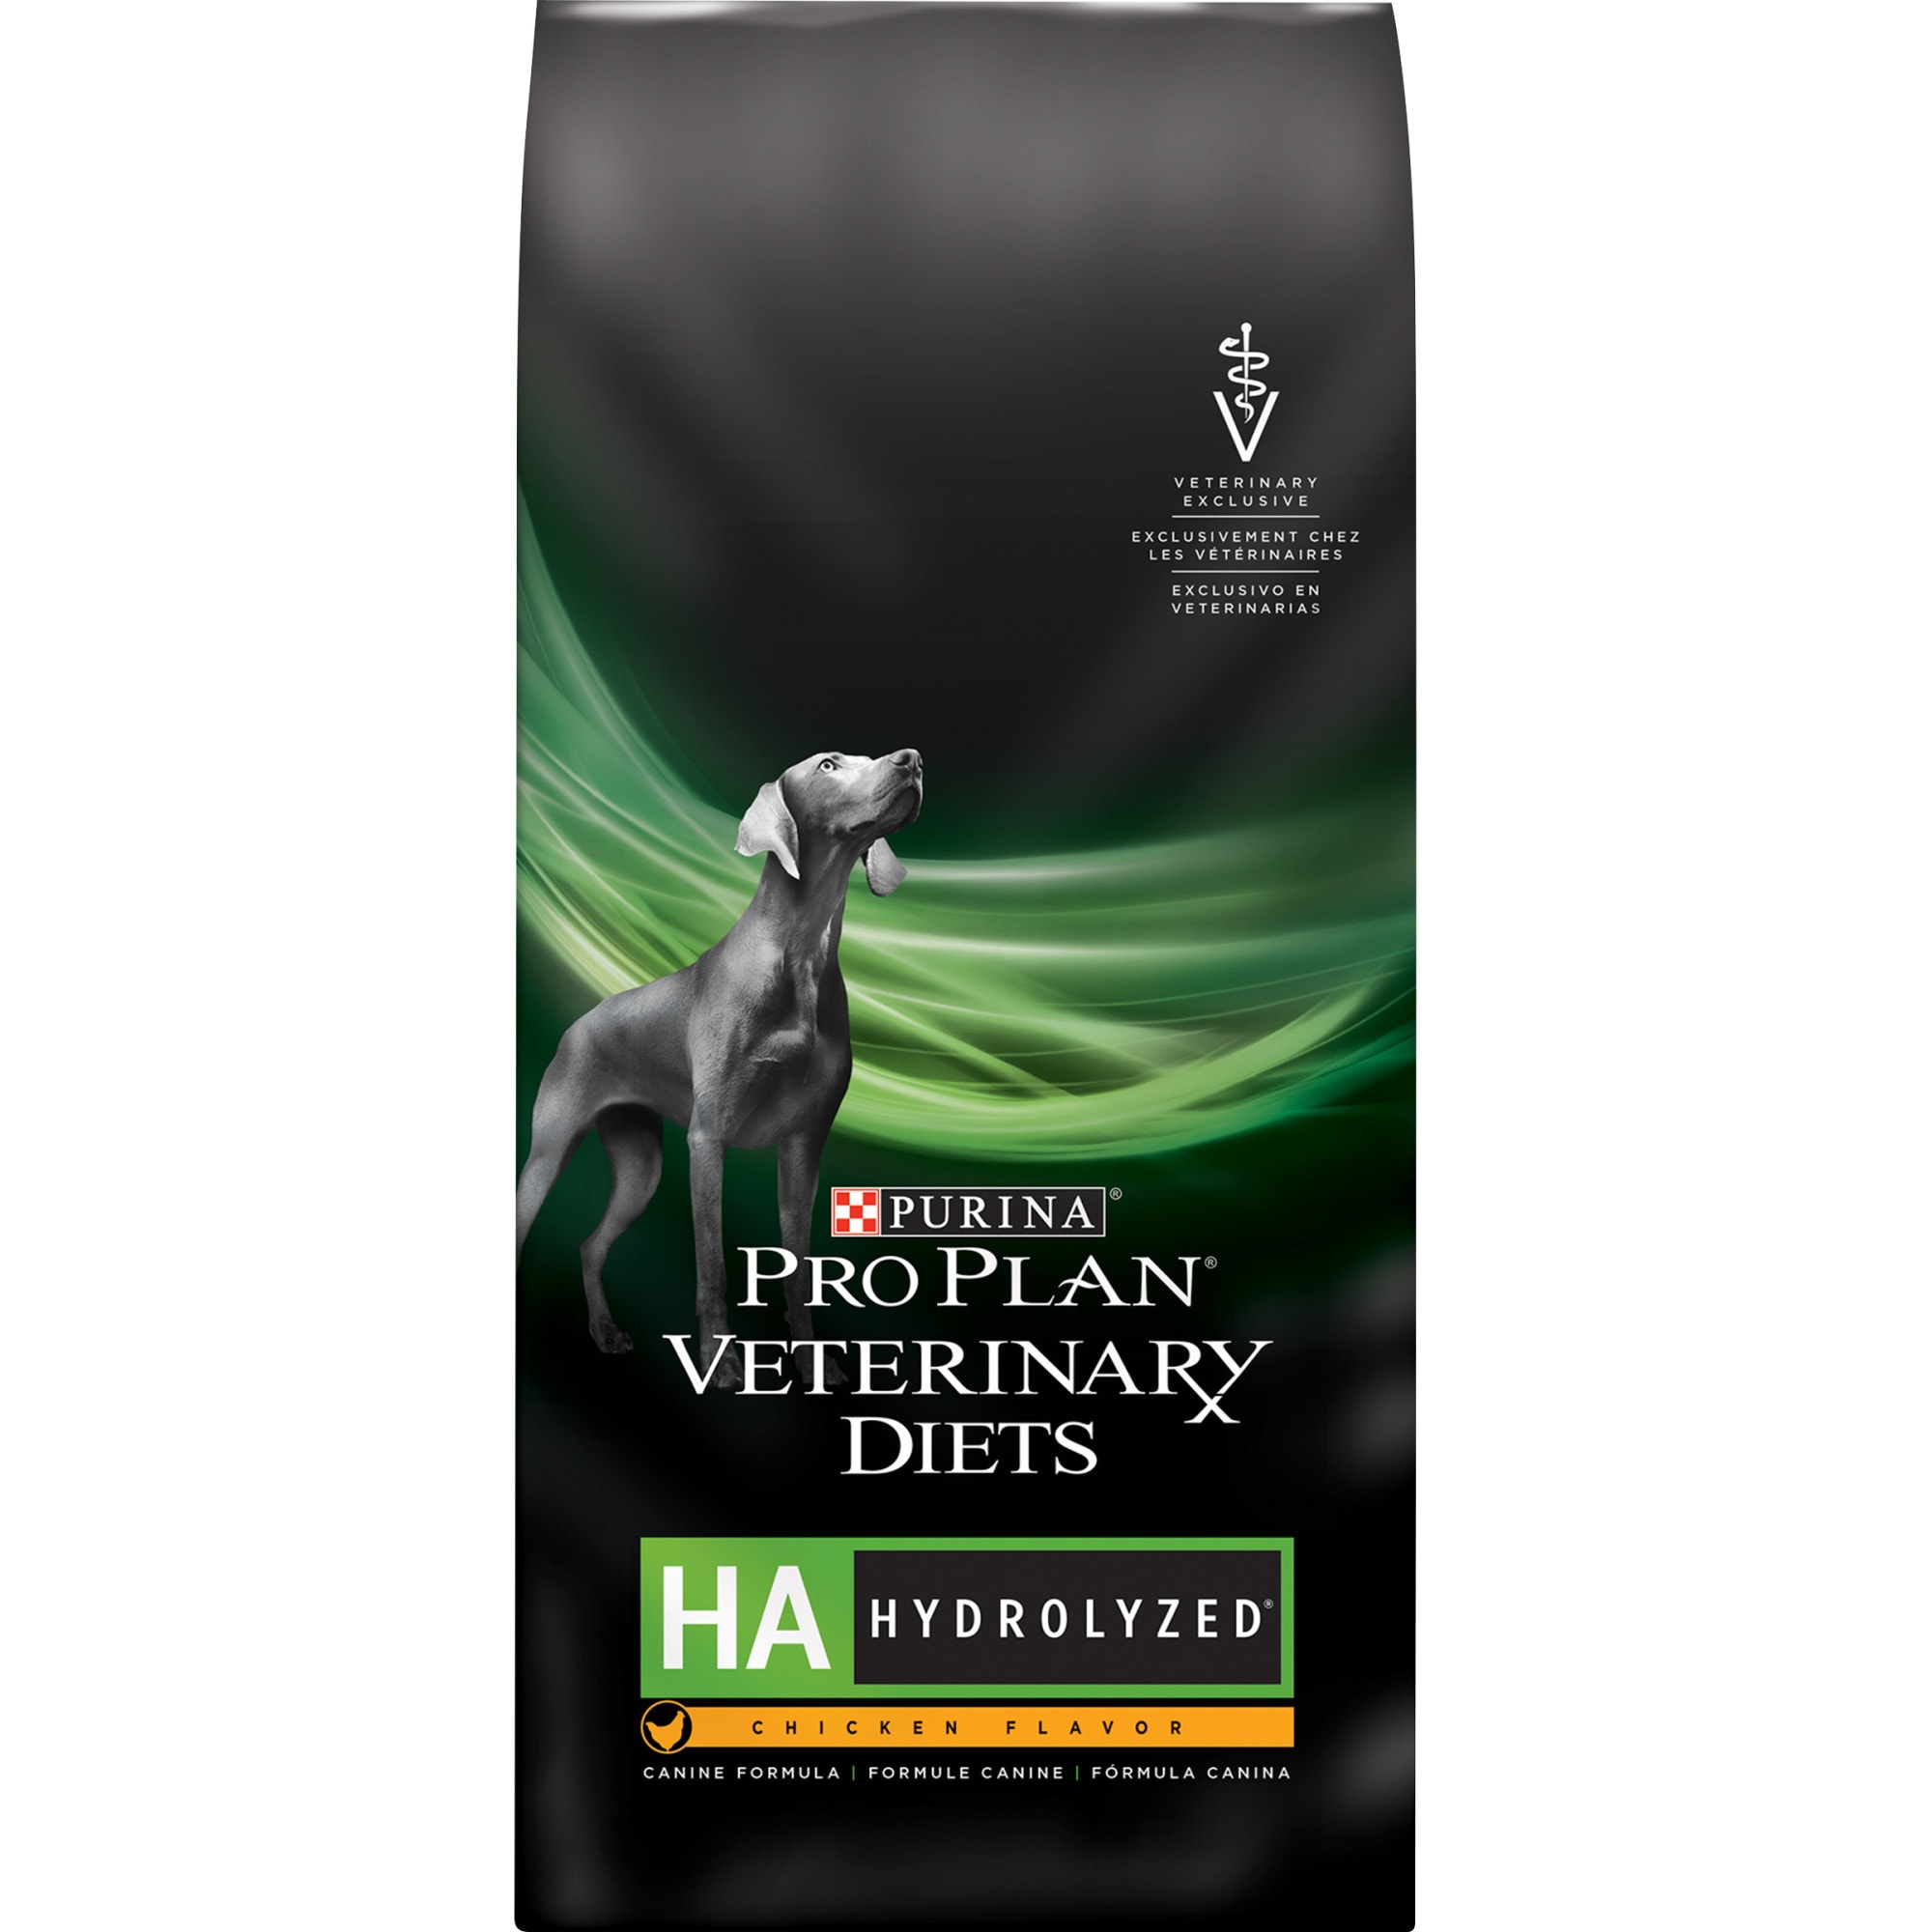 Purina Pro Plan Veterinary Diets HA Hydrolyzed Chicken Flavor Canine Formula Dry Dog Food, 25 lbs.